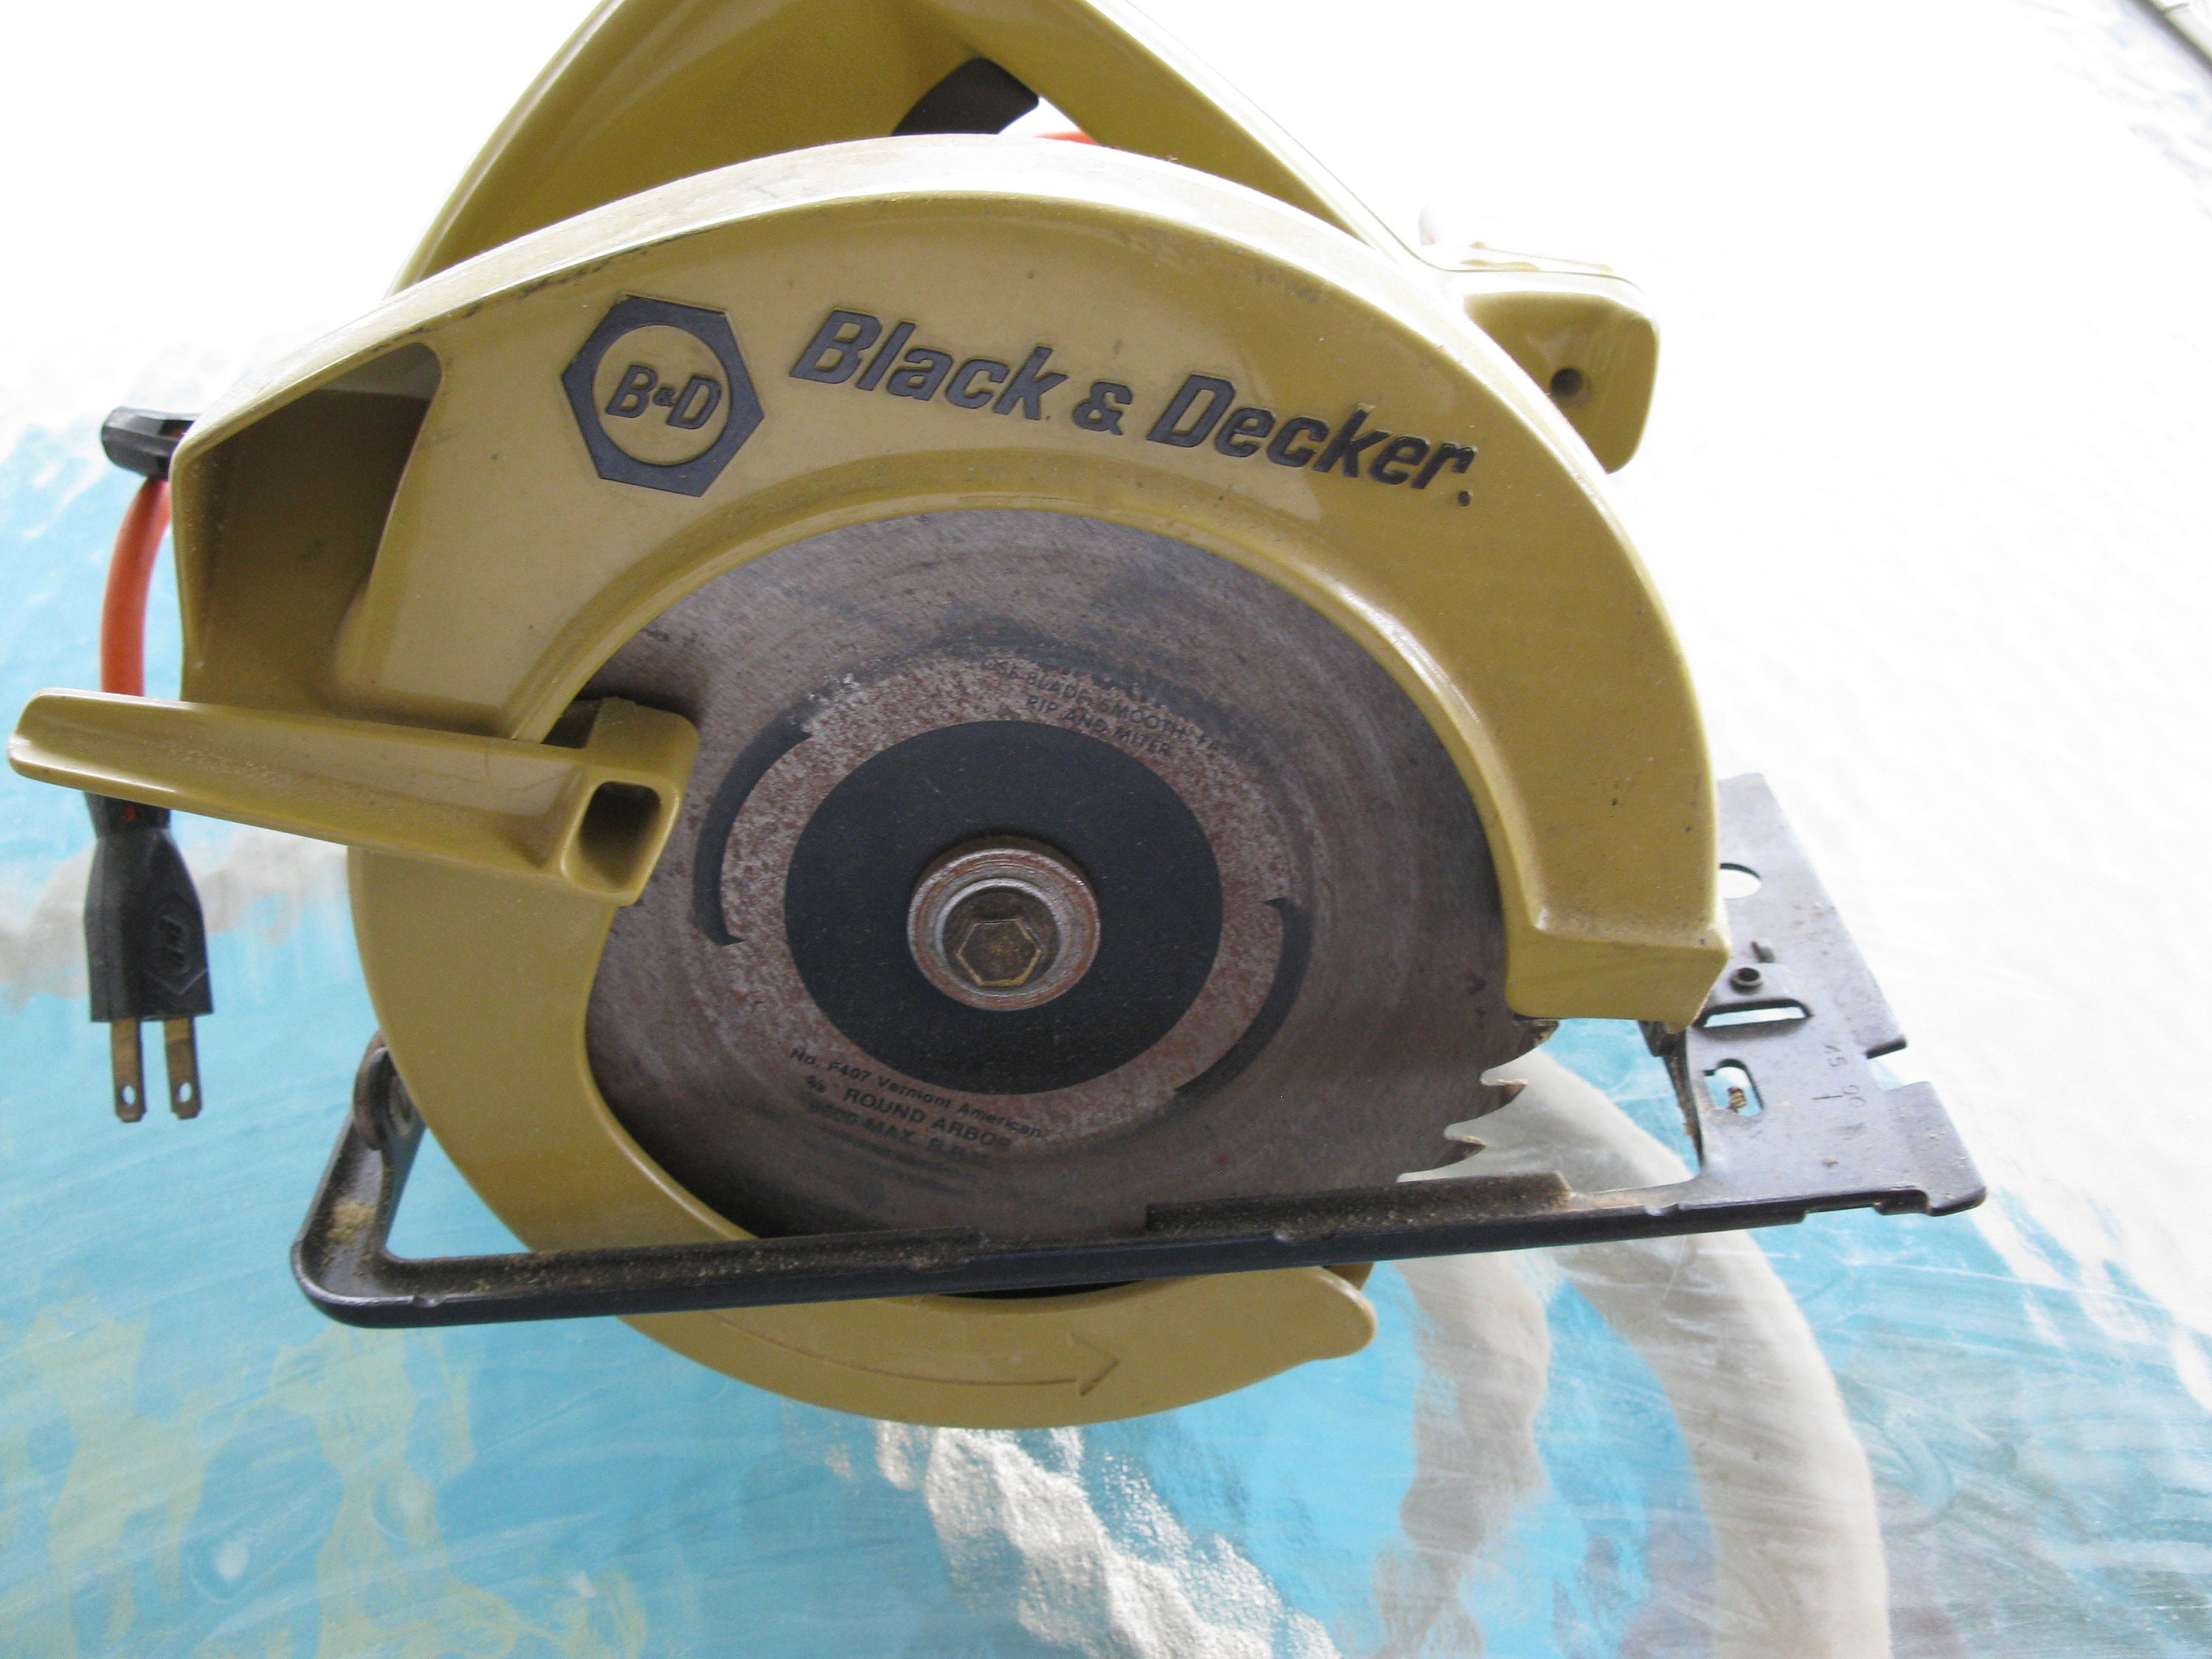 Older, Powerful Black & Decker Made in USA Circular Saw. Free Shipping 